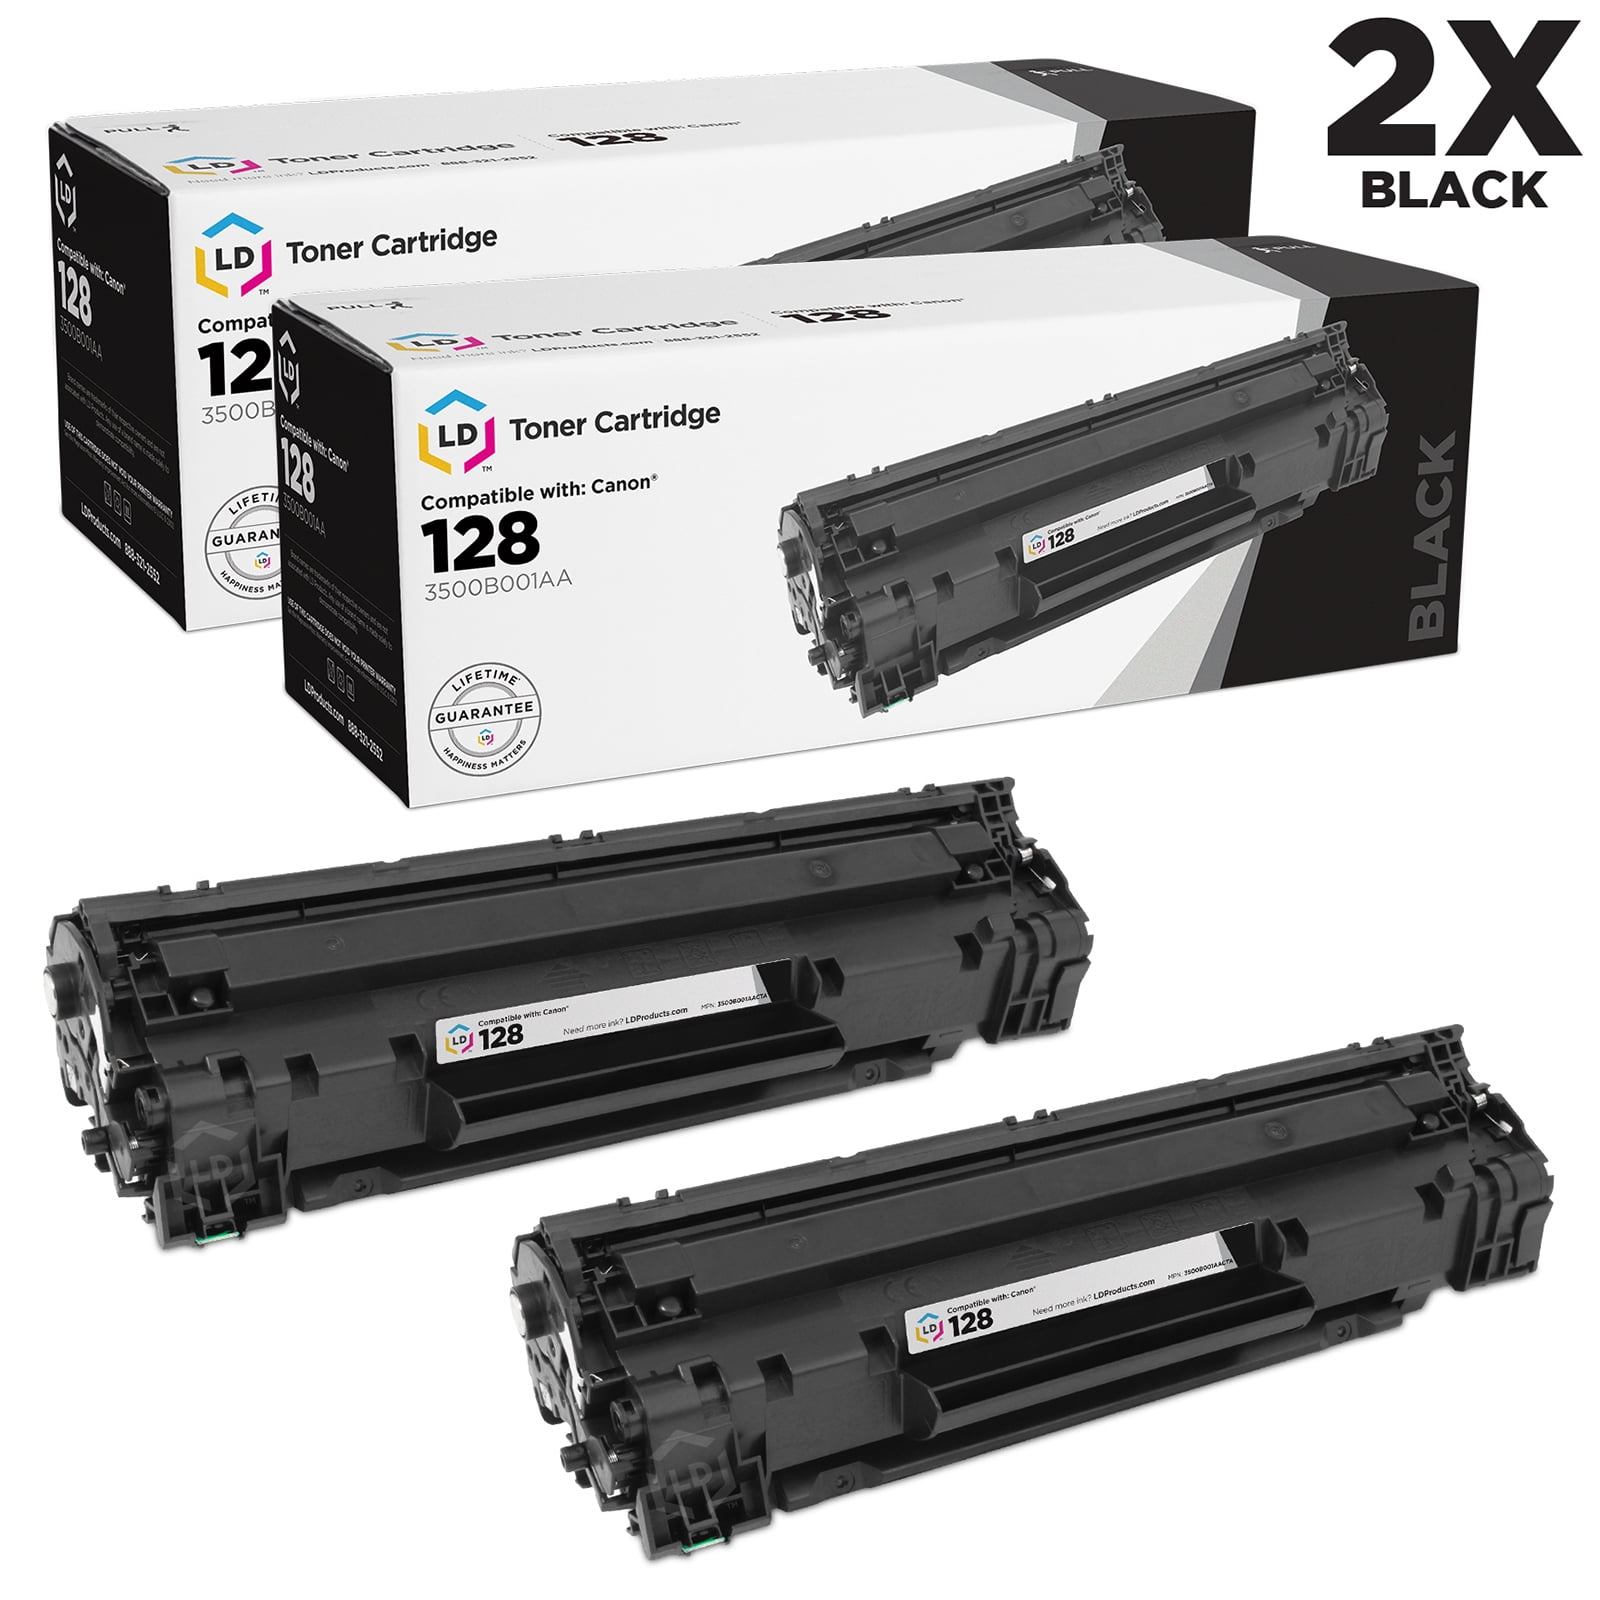 fit for Canon Image Class L190 L100 Printer Black Compatible CRG-128 Printer Toner Cartridge 8-Pack High Capacity 